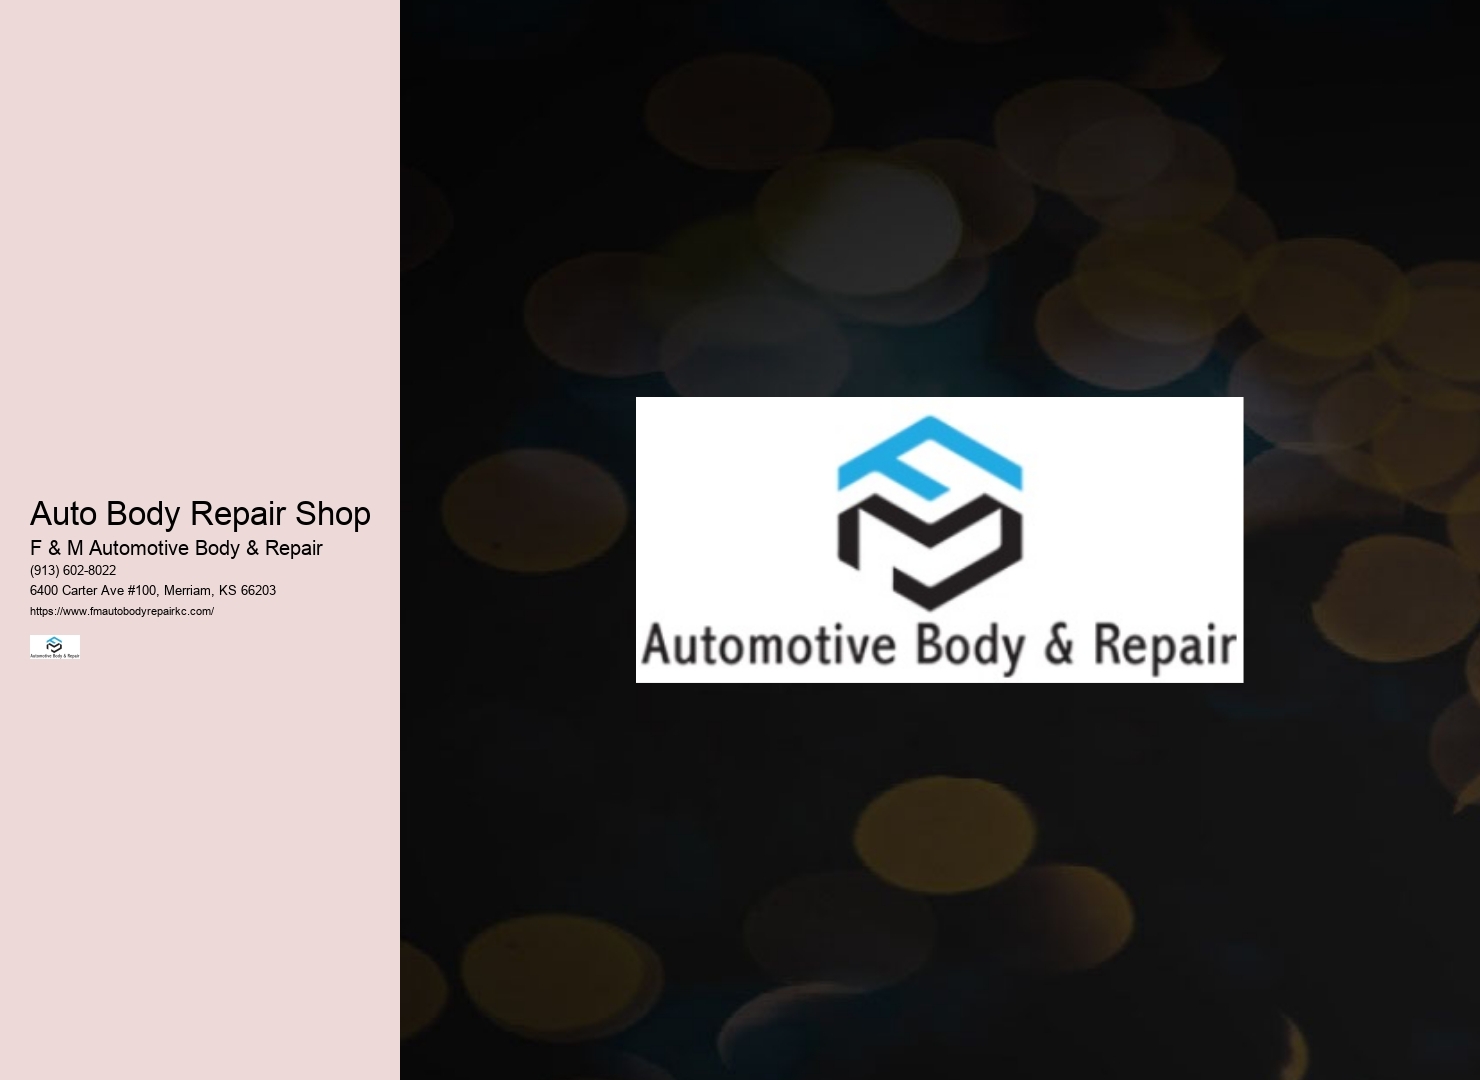 Auto Body Repair Shop